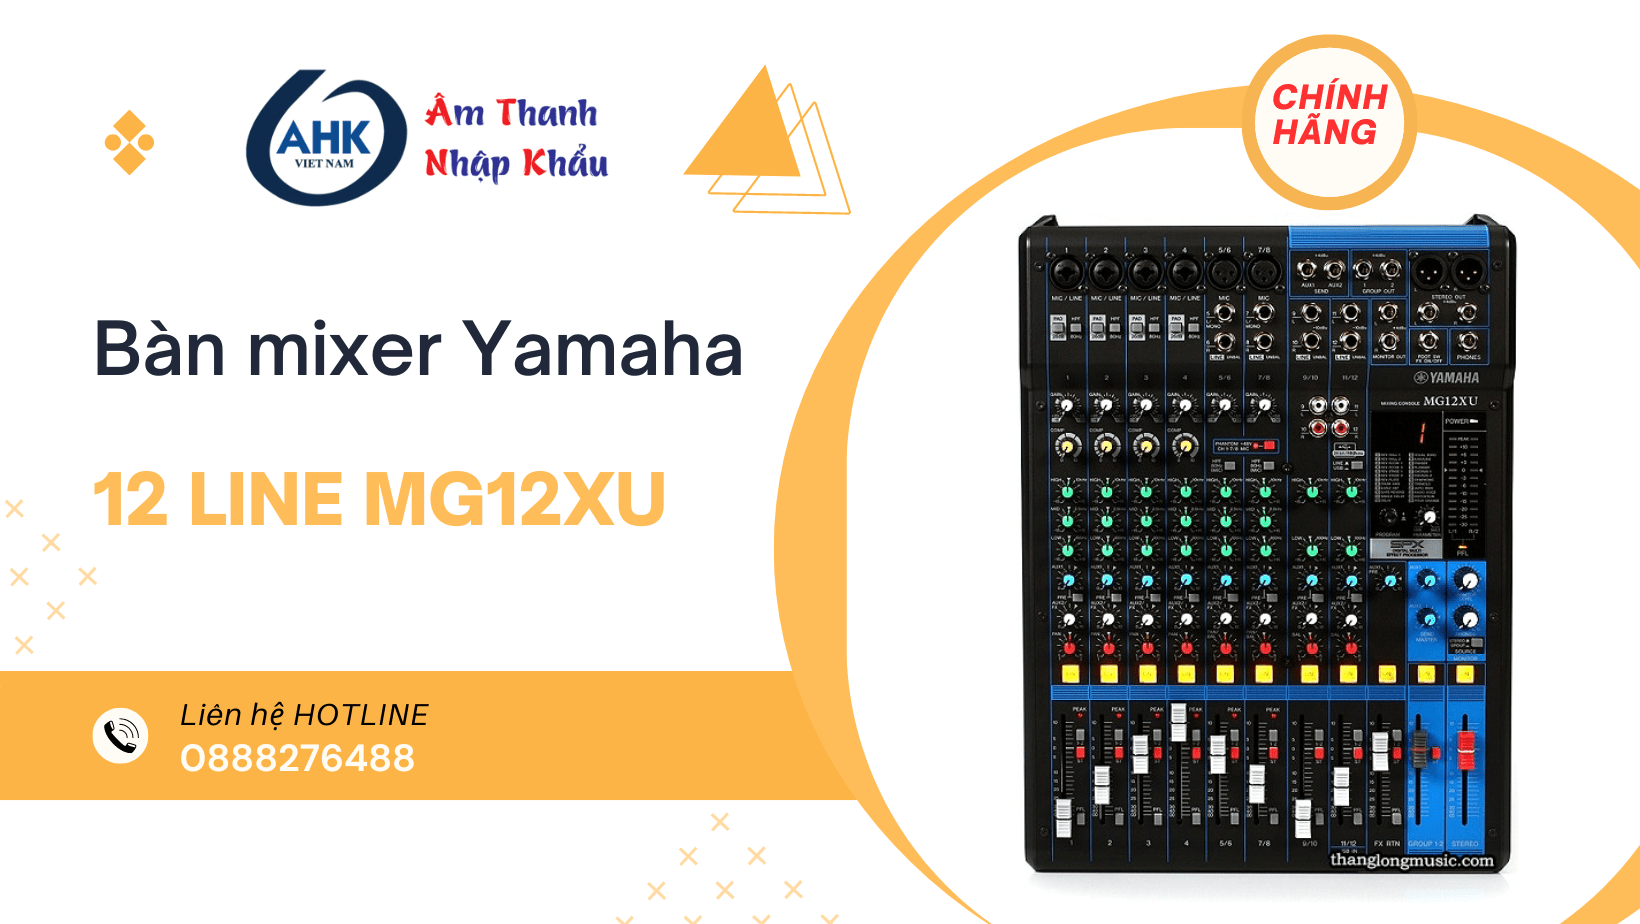 Bàn mixer Yamaha 12 line MG12XU